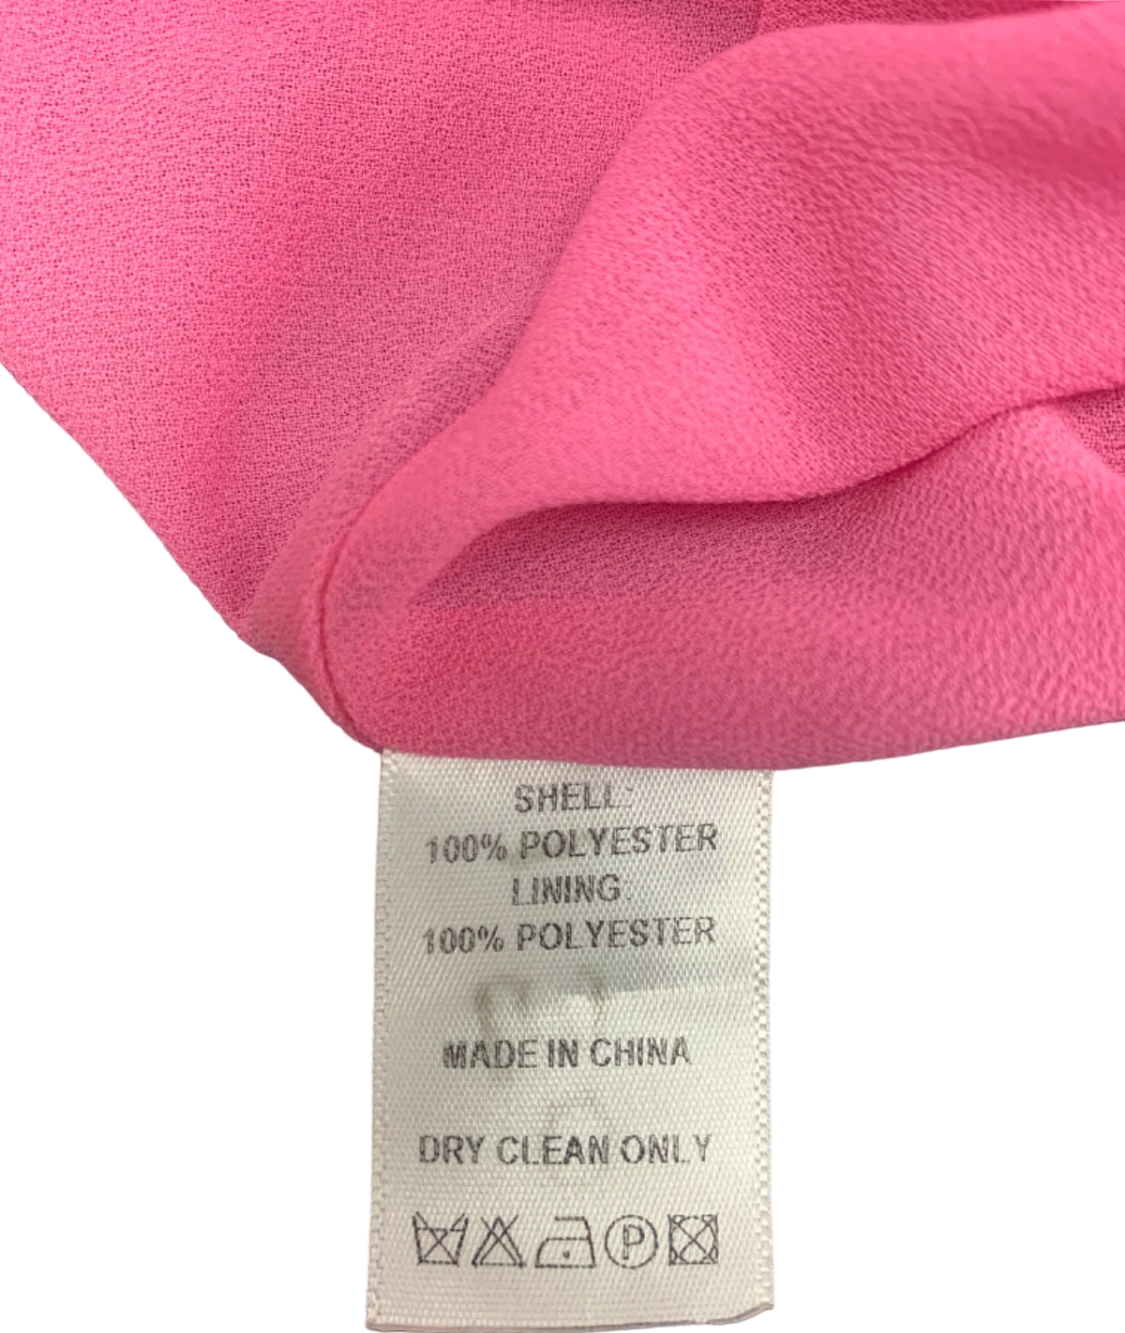 Olivia Rubin Pink Polka Dot Imogen Sequin Dress UK Size 10